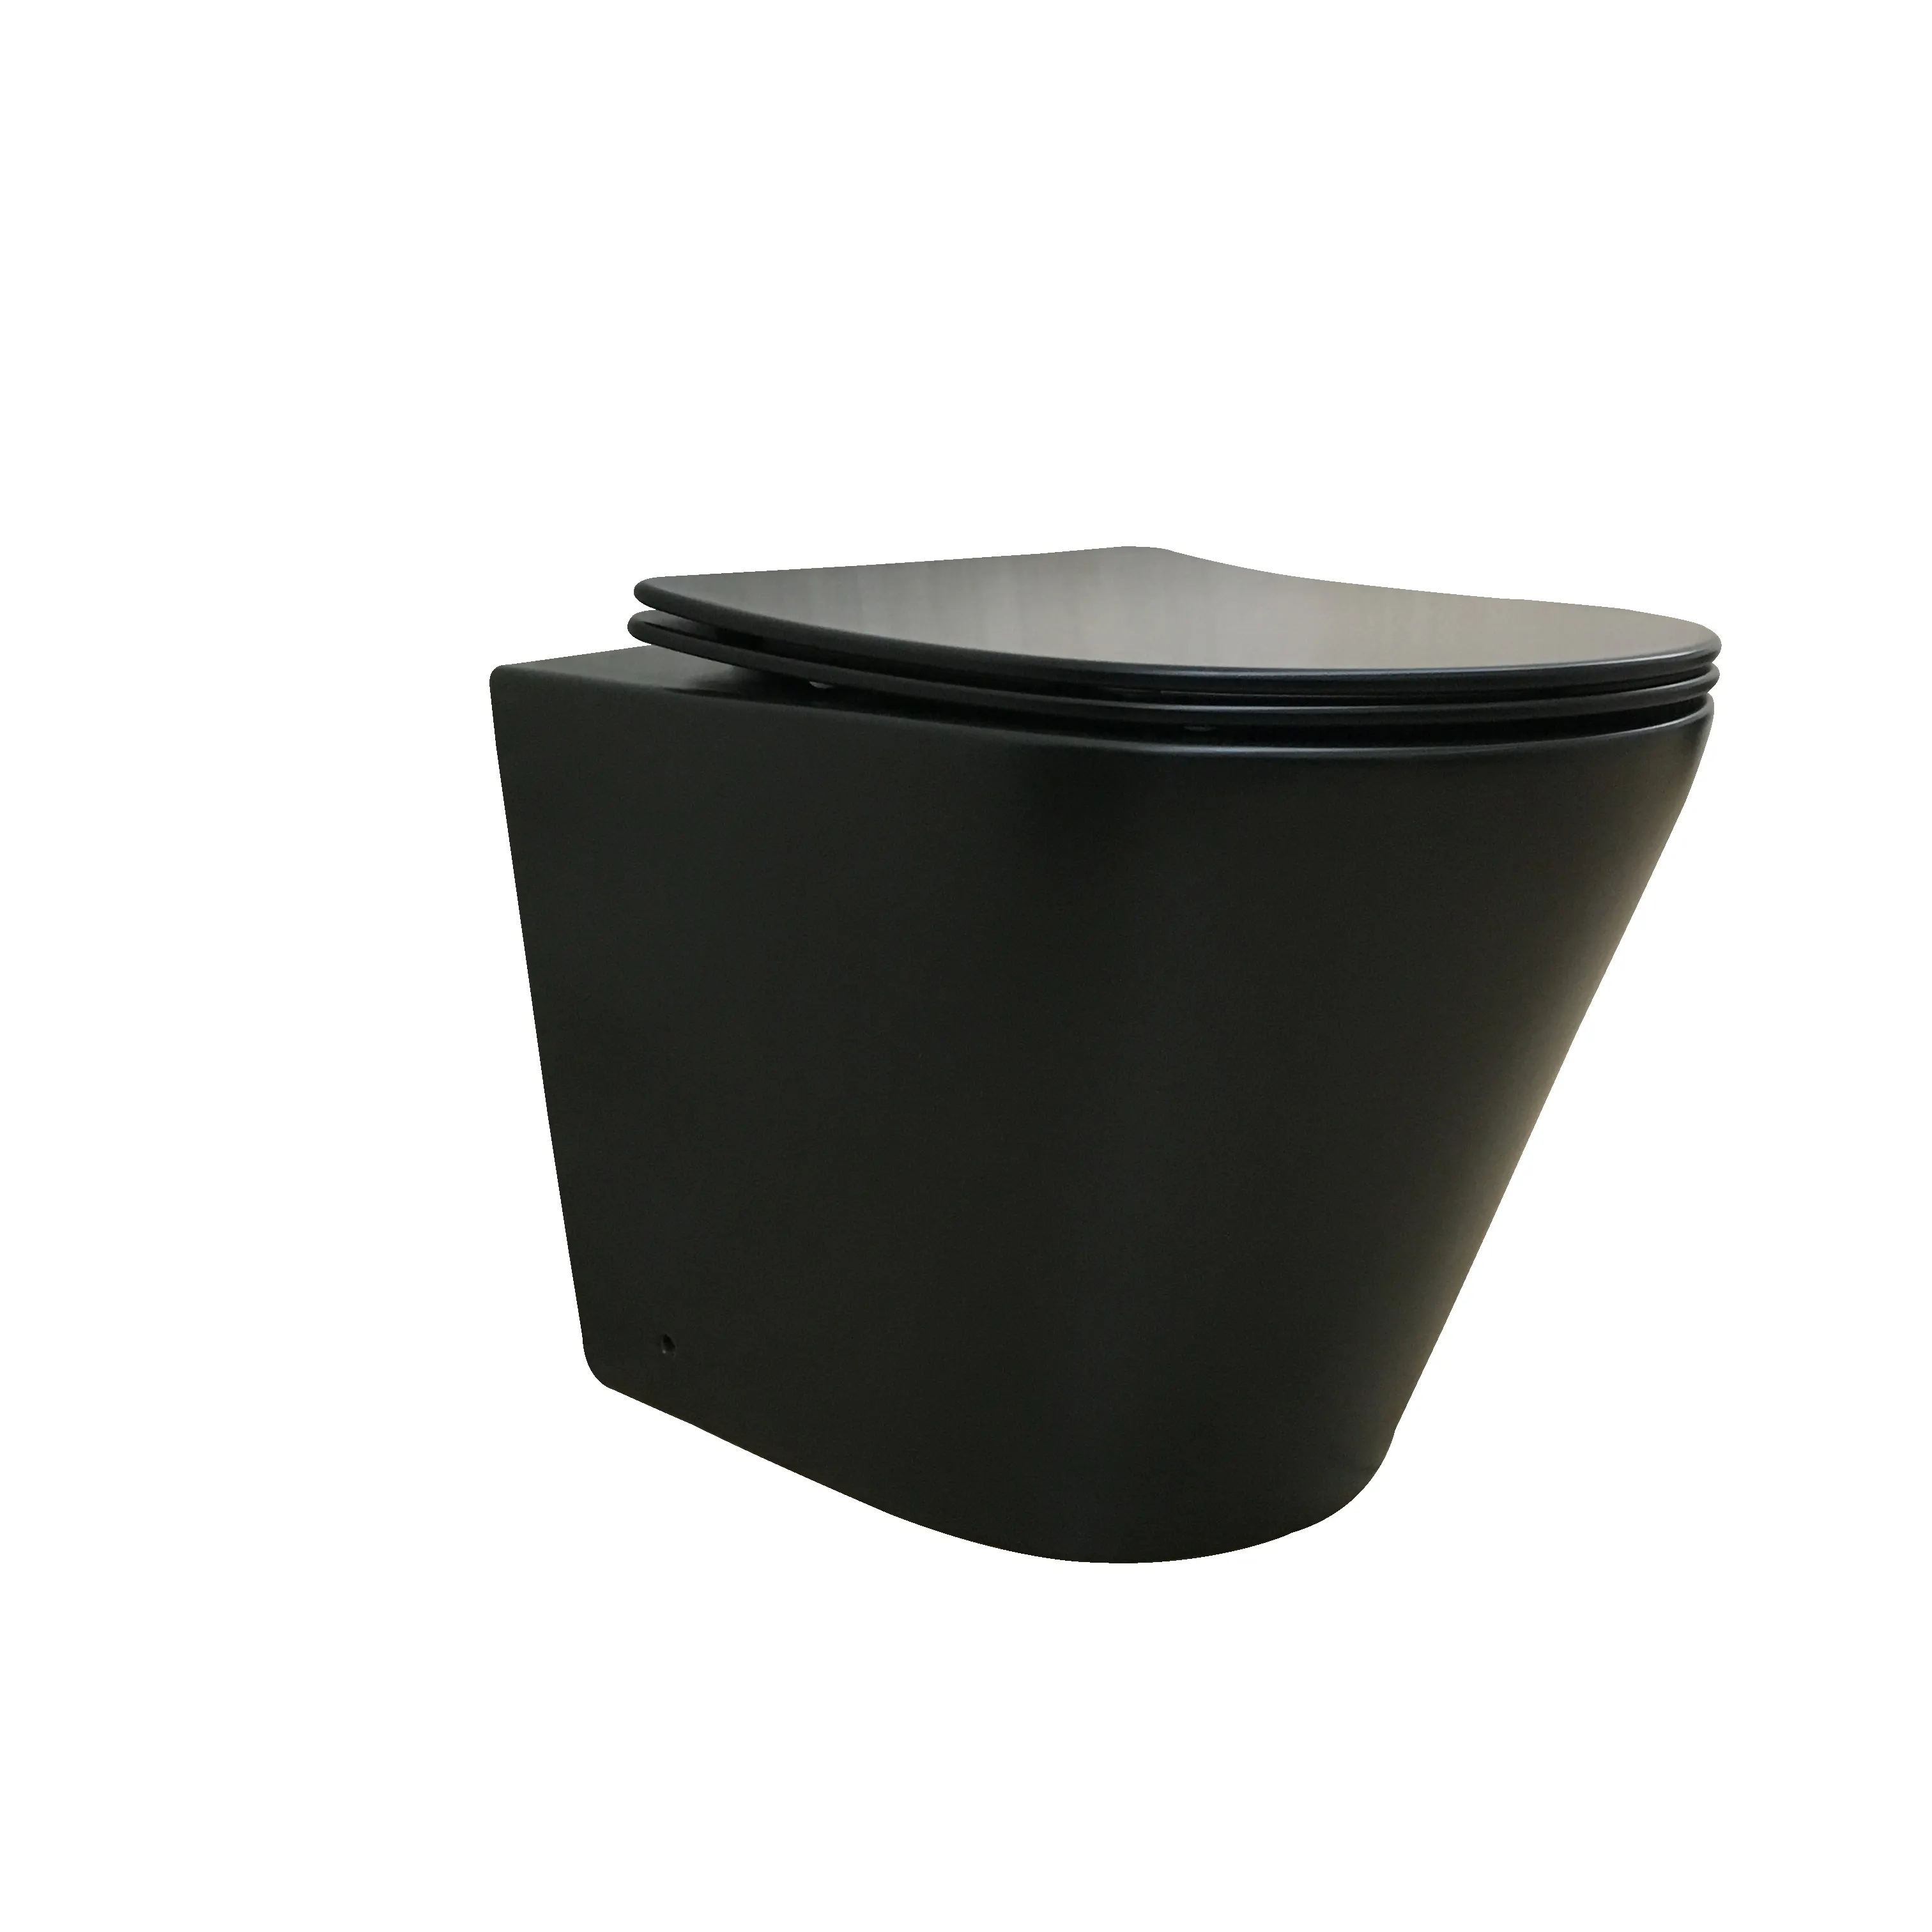 UK popular sanitary ware matt black wall face wc toilet ceramic back to wall floor mounted toilets